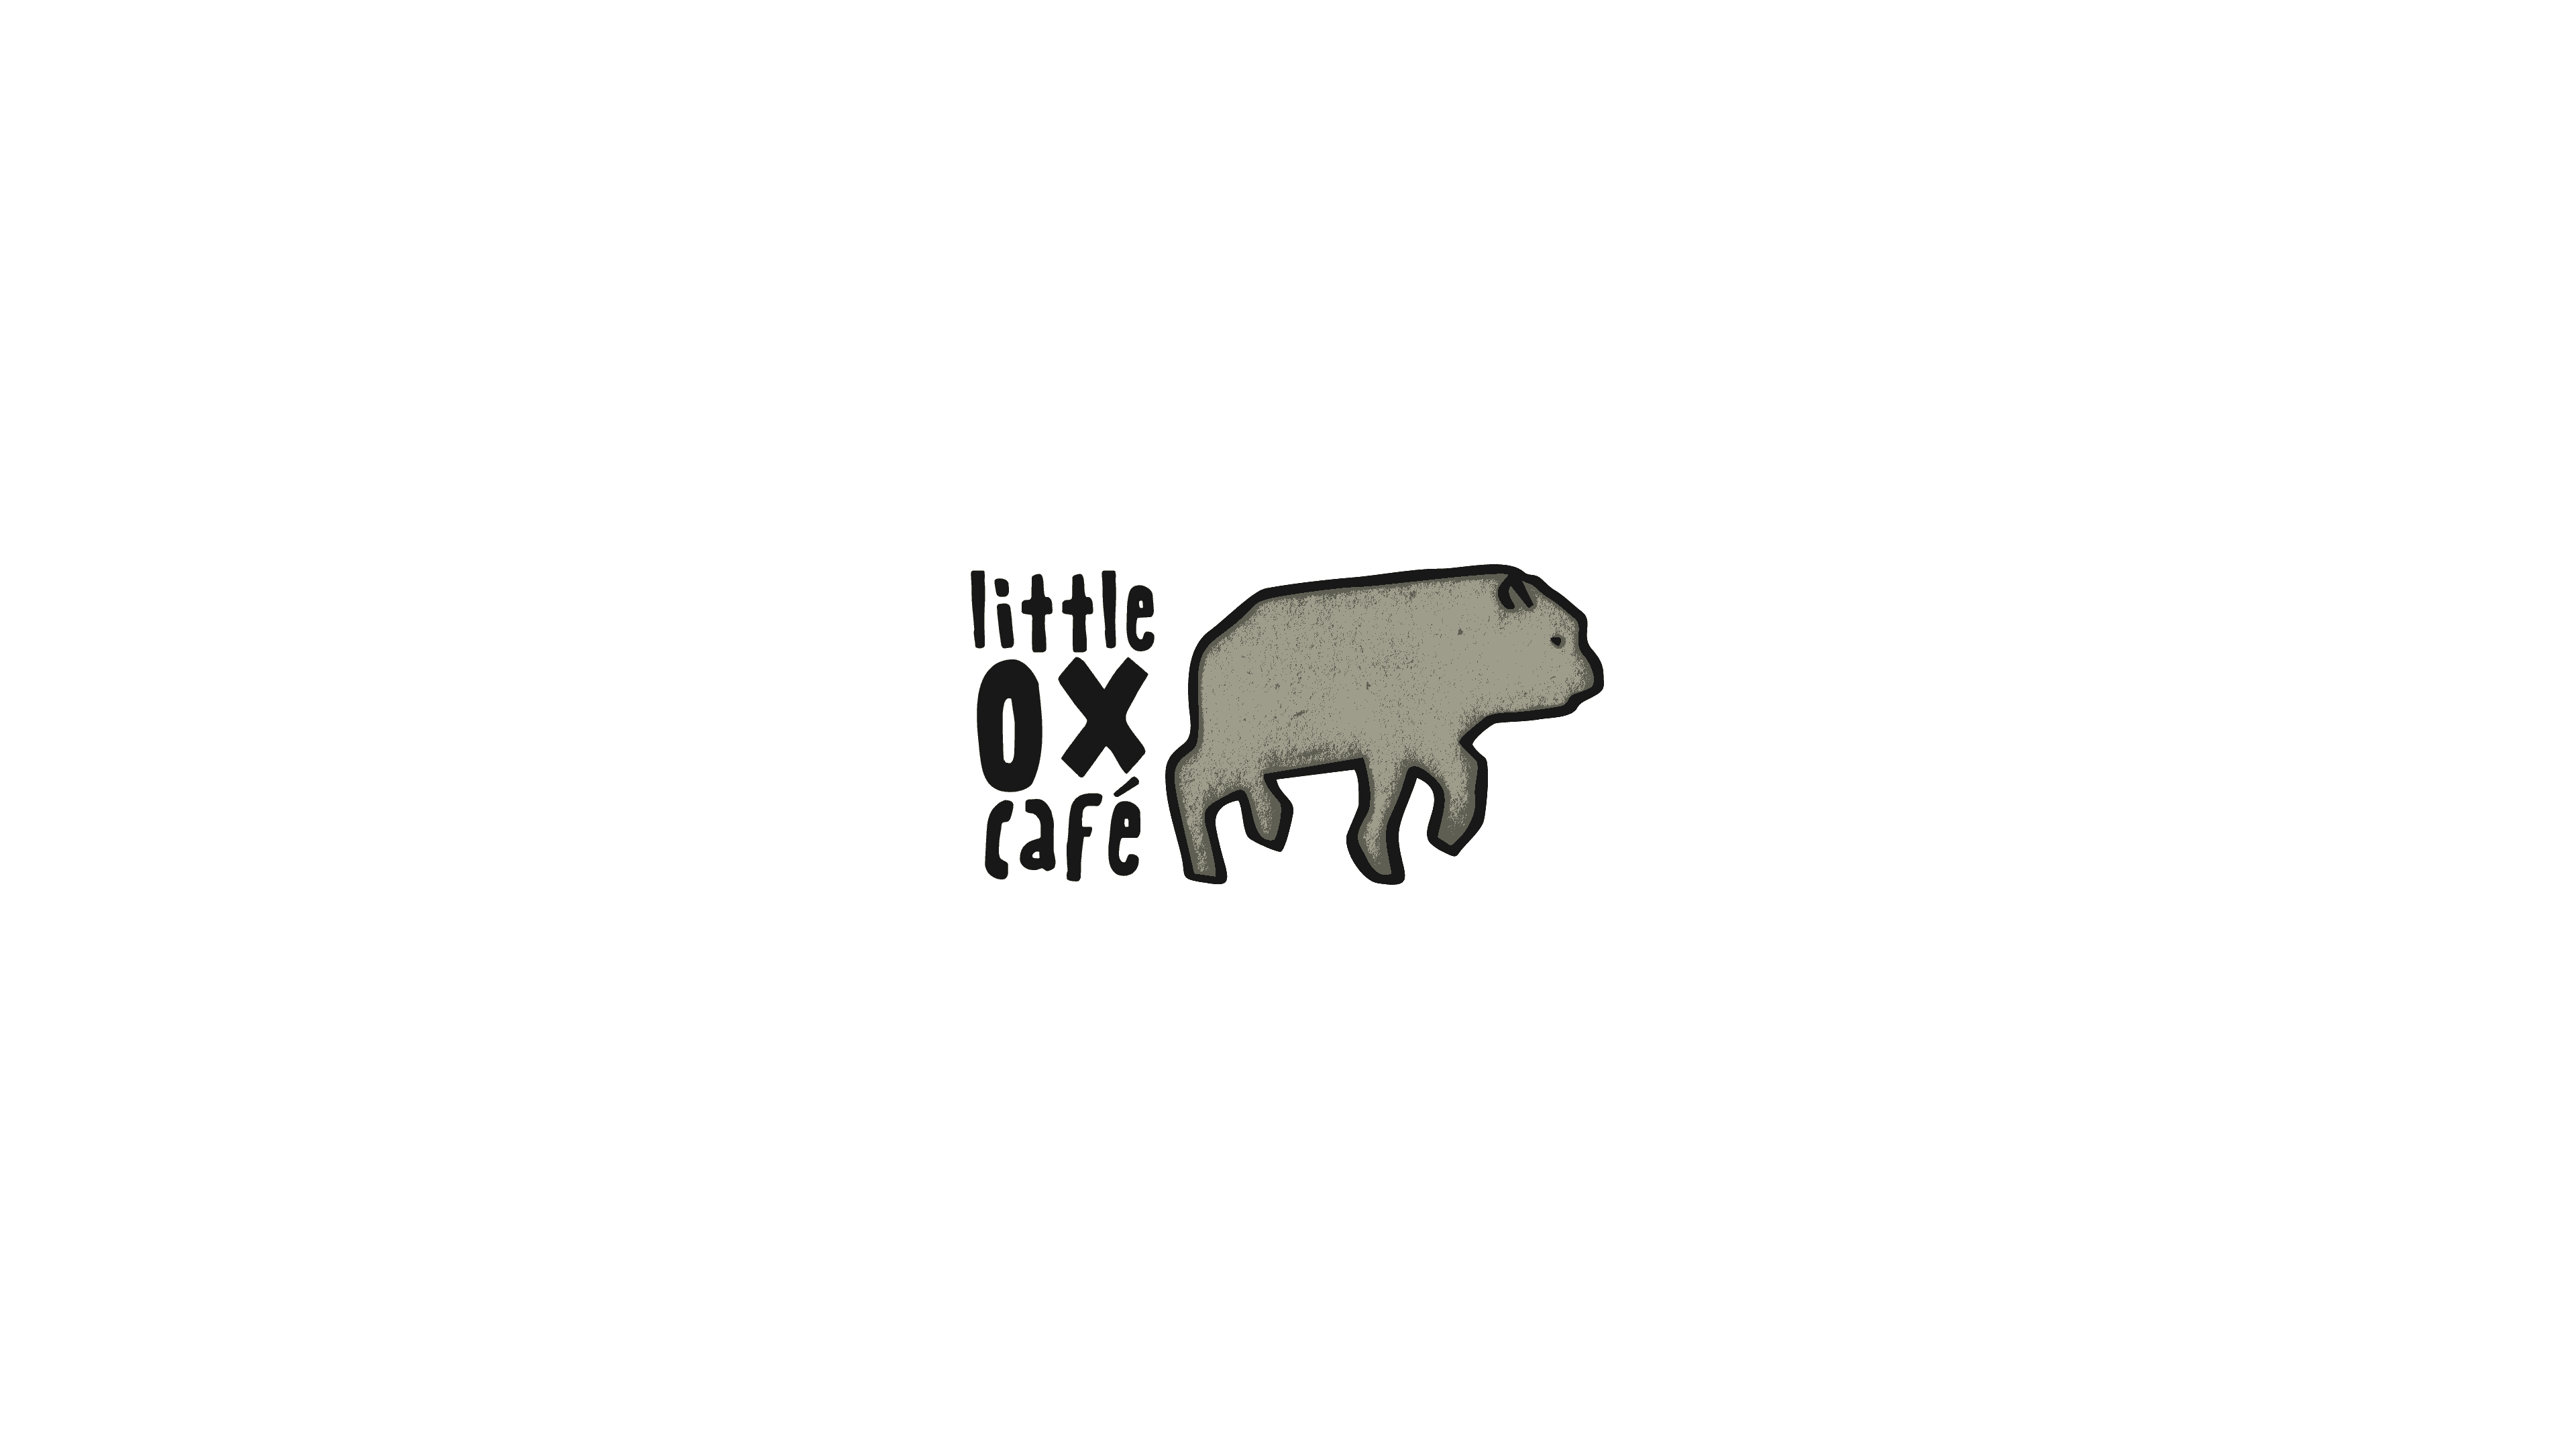 Little ox café logo.